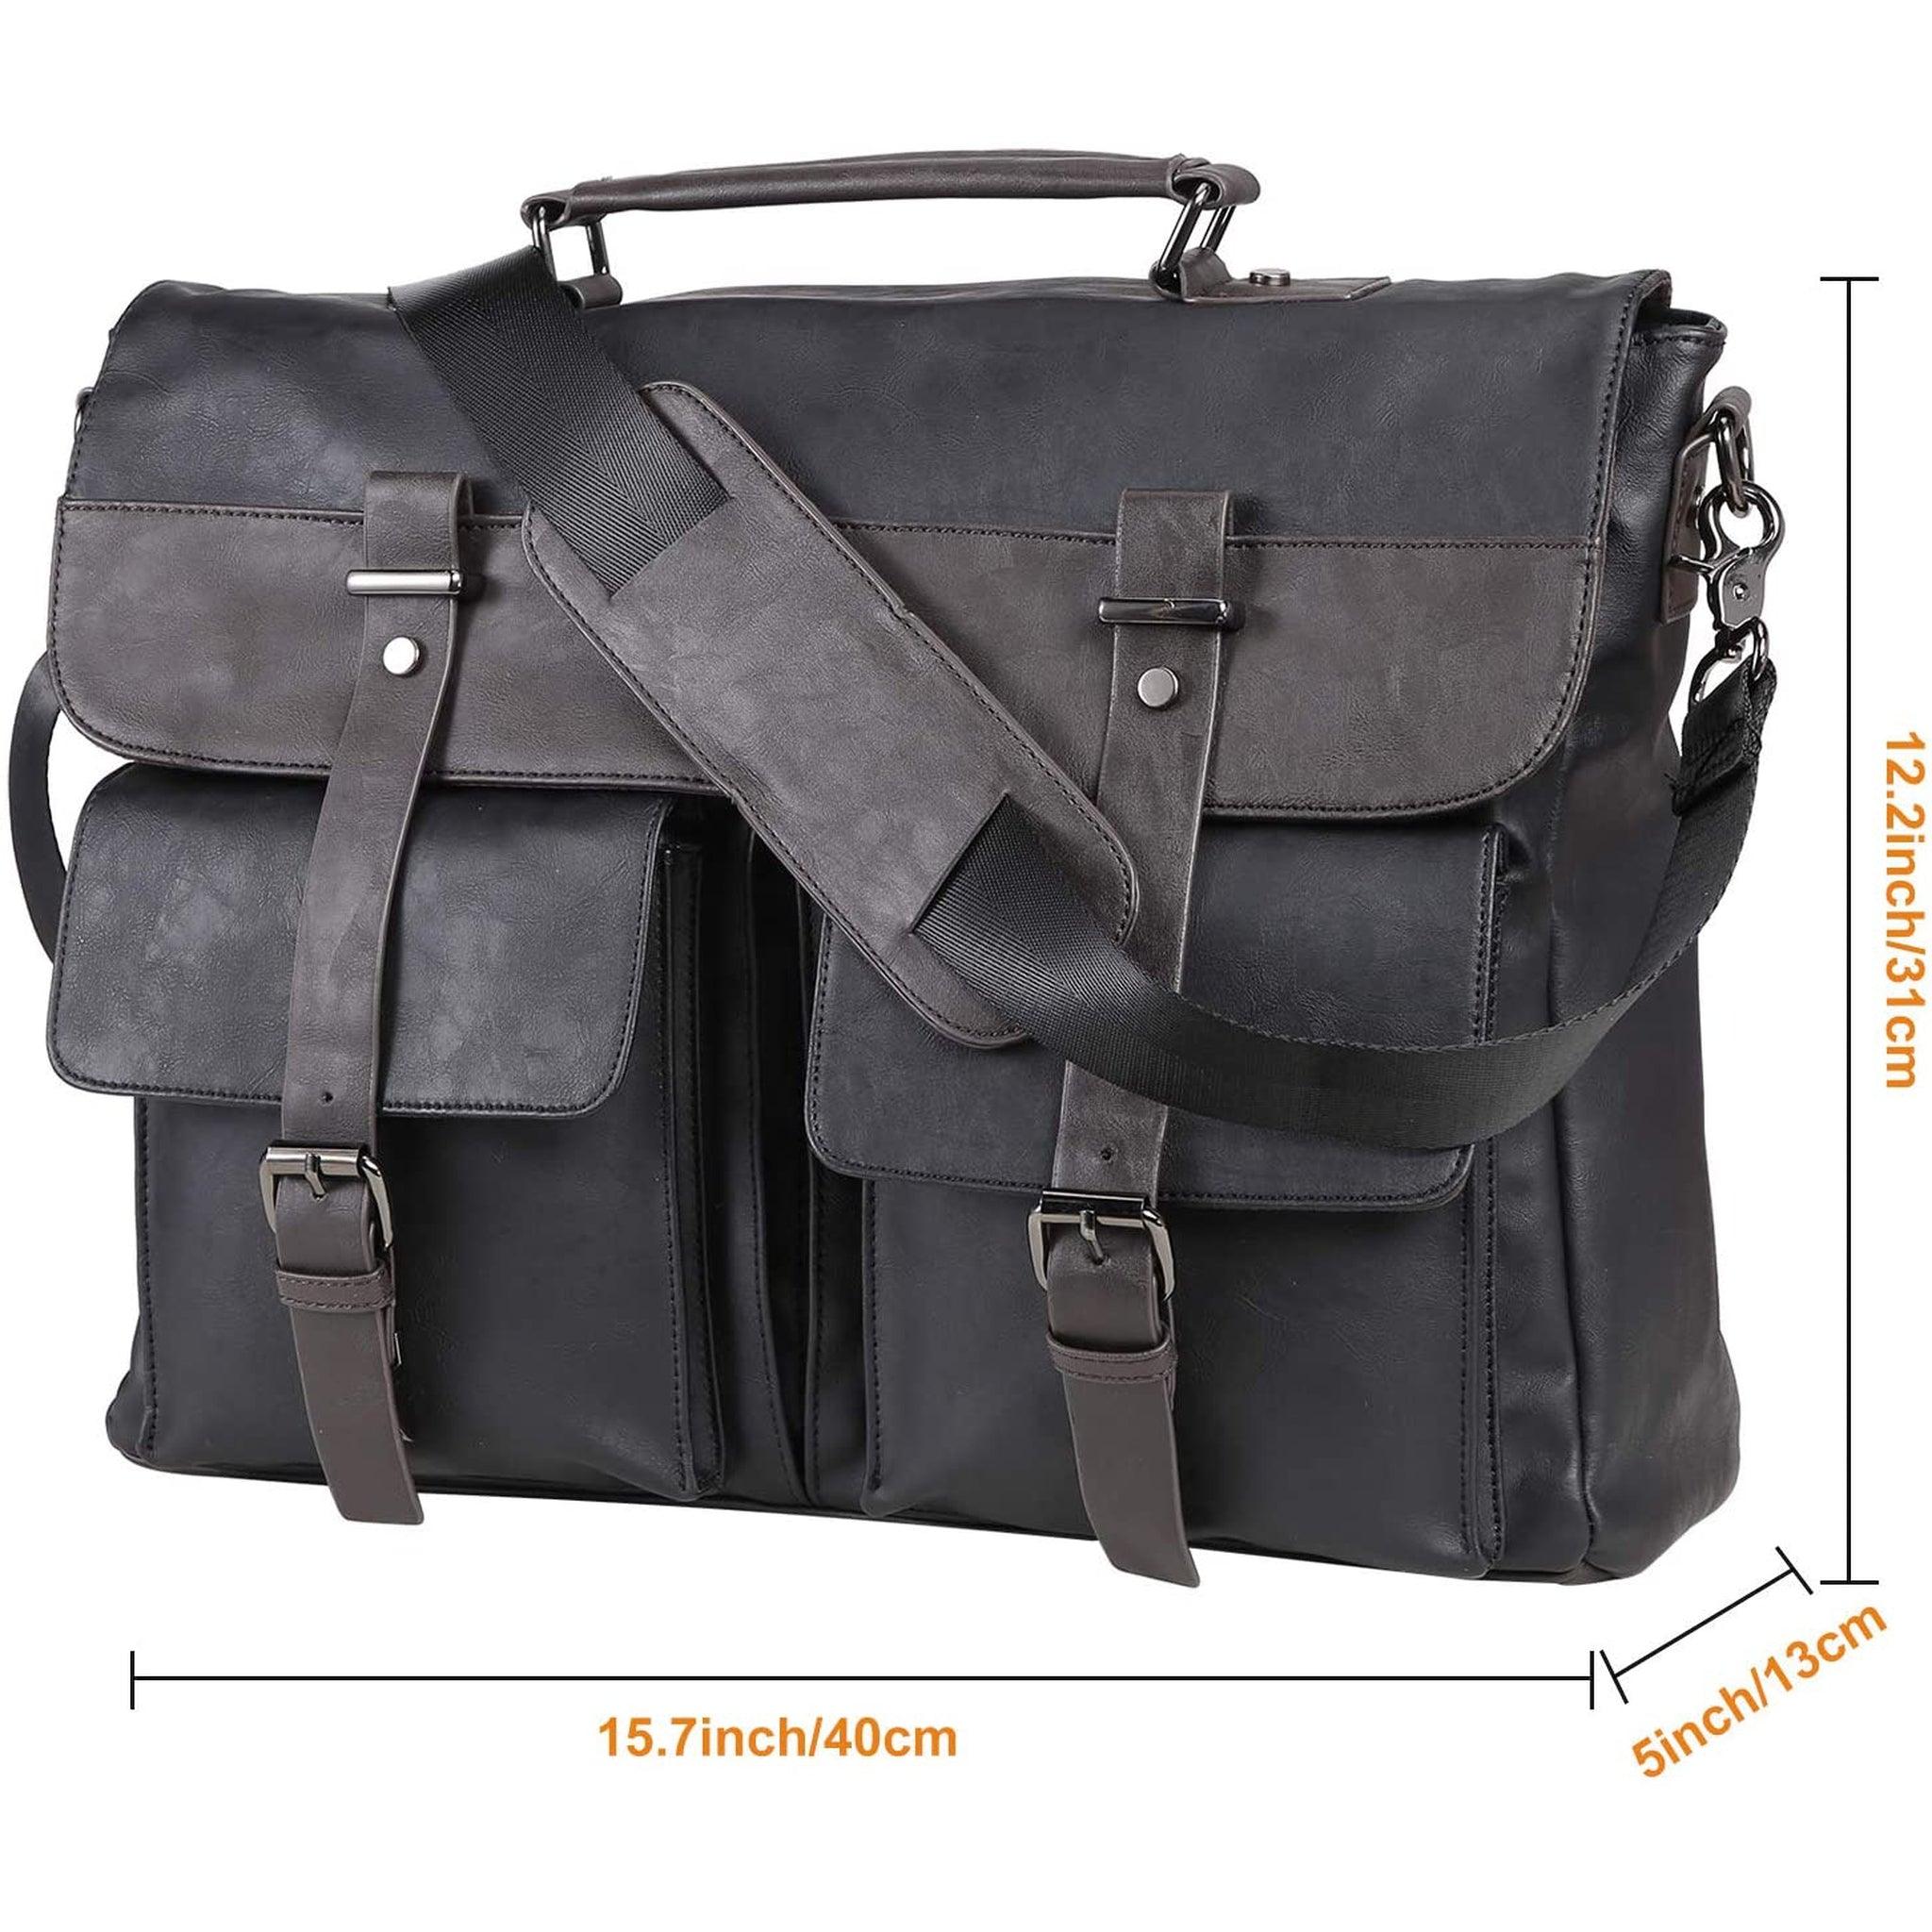 Fashionable Leather Messenger Bag - FR Fashion Co.